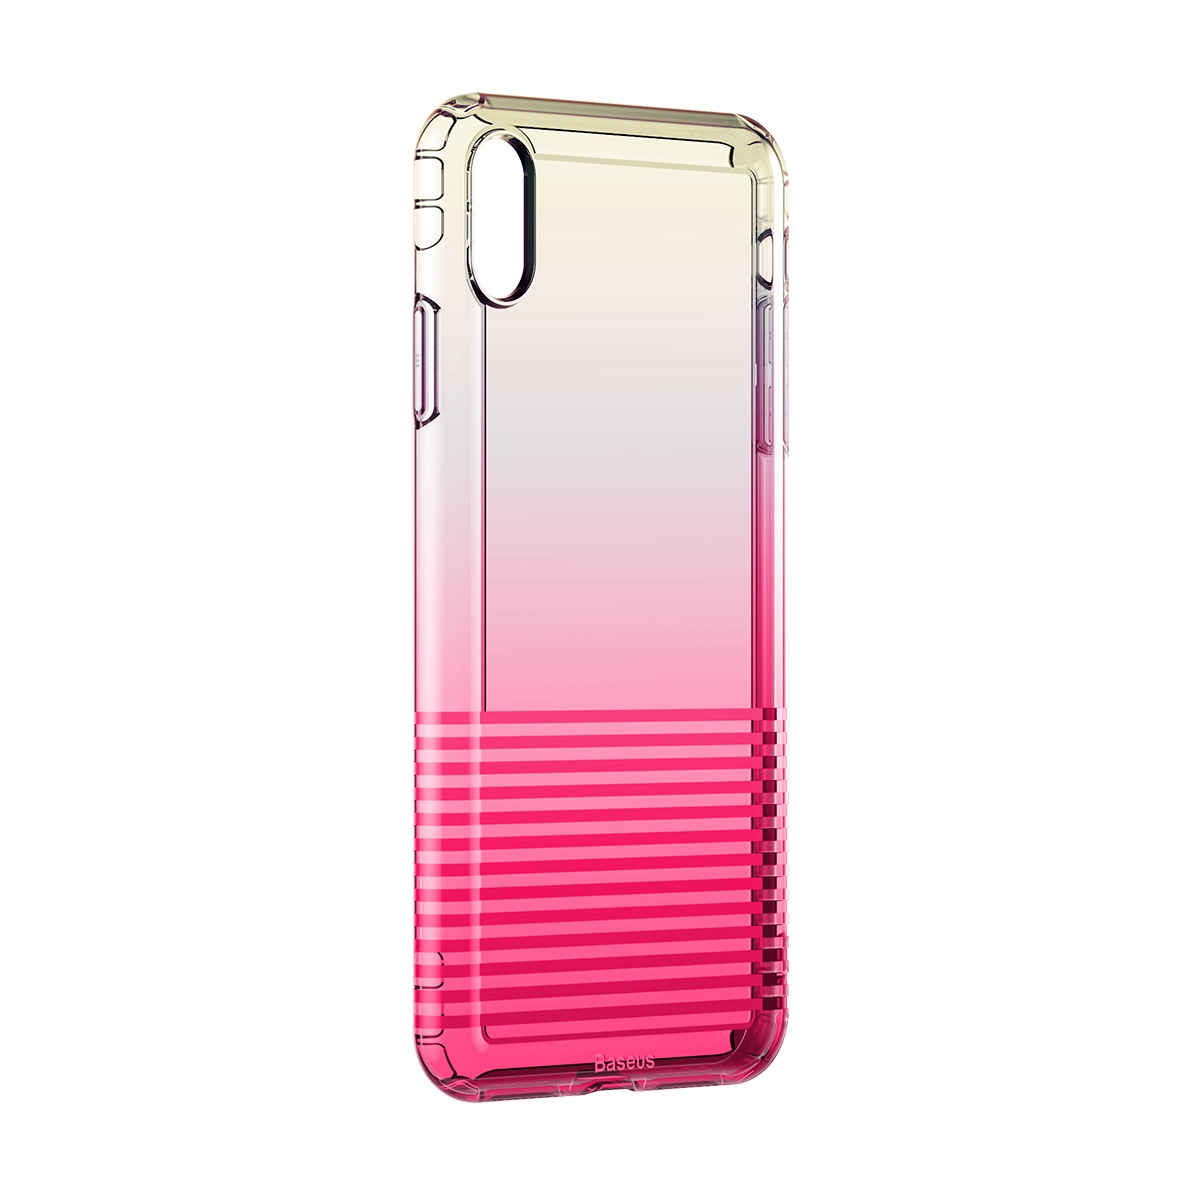 Чехол для сотового телефона Baseus WIAPIPH61-XC04, розовый